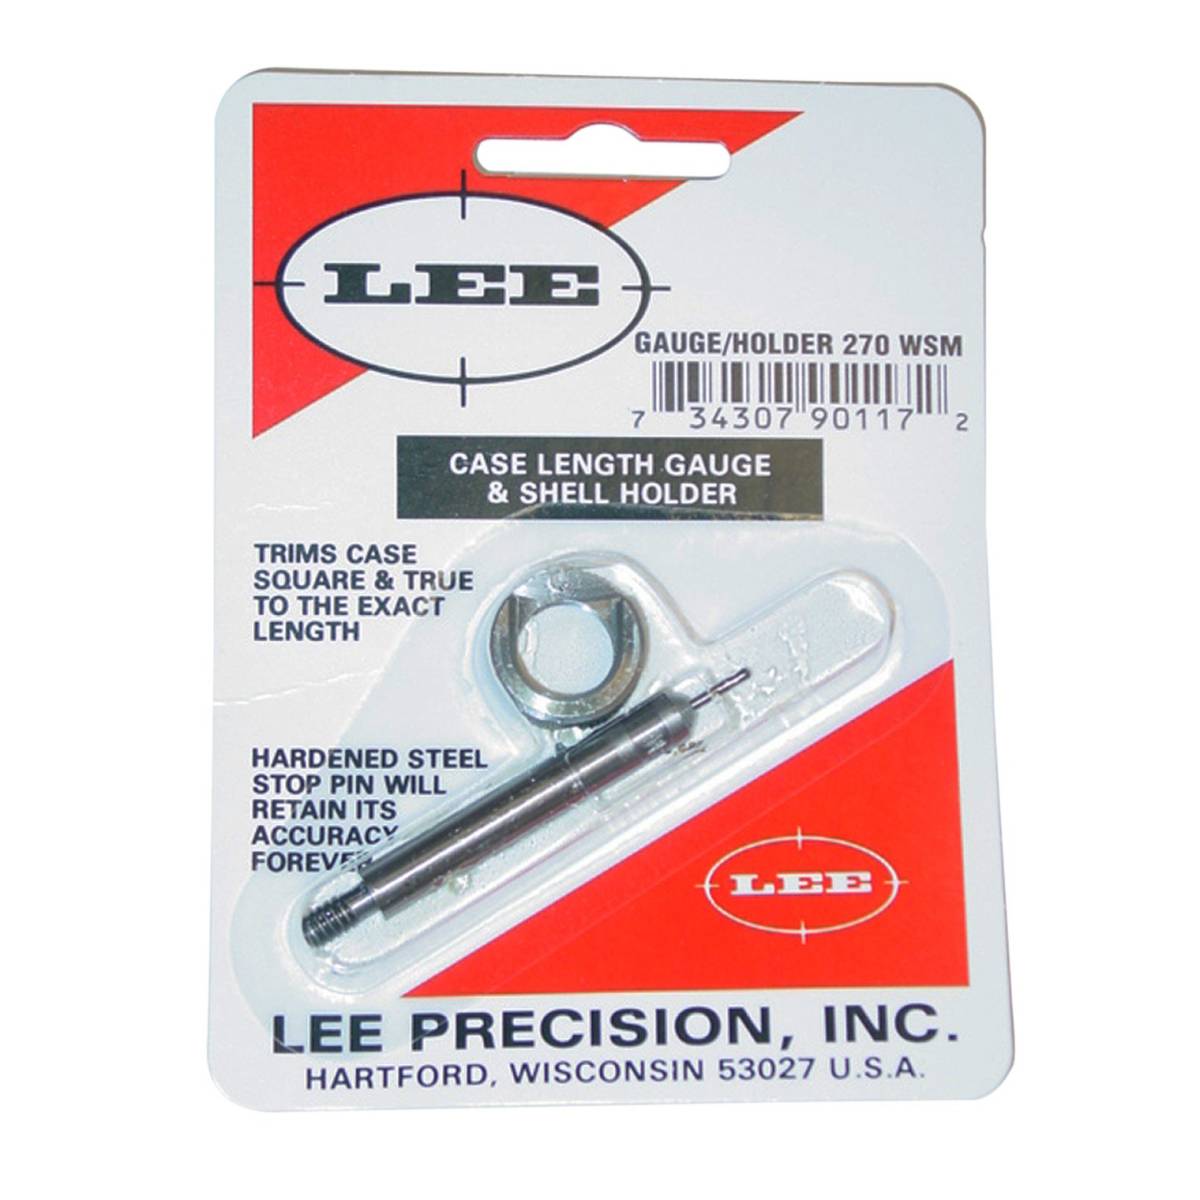 Lee Precision 90117 Case Length Gauge 270 WSM-img-0